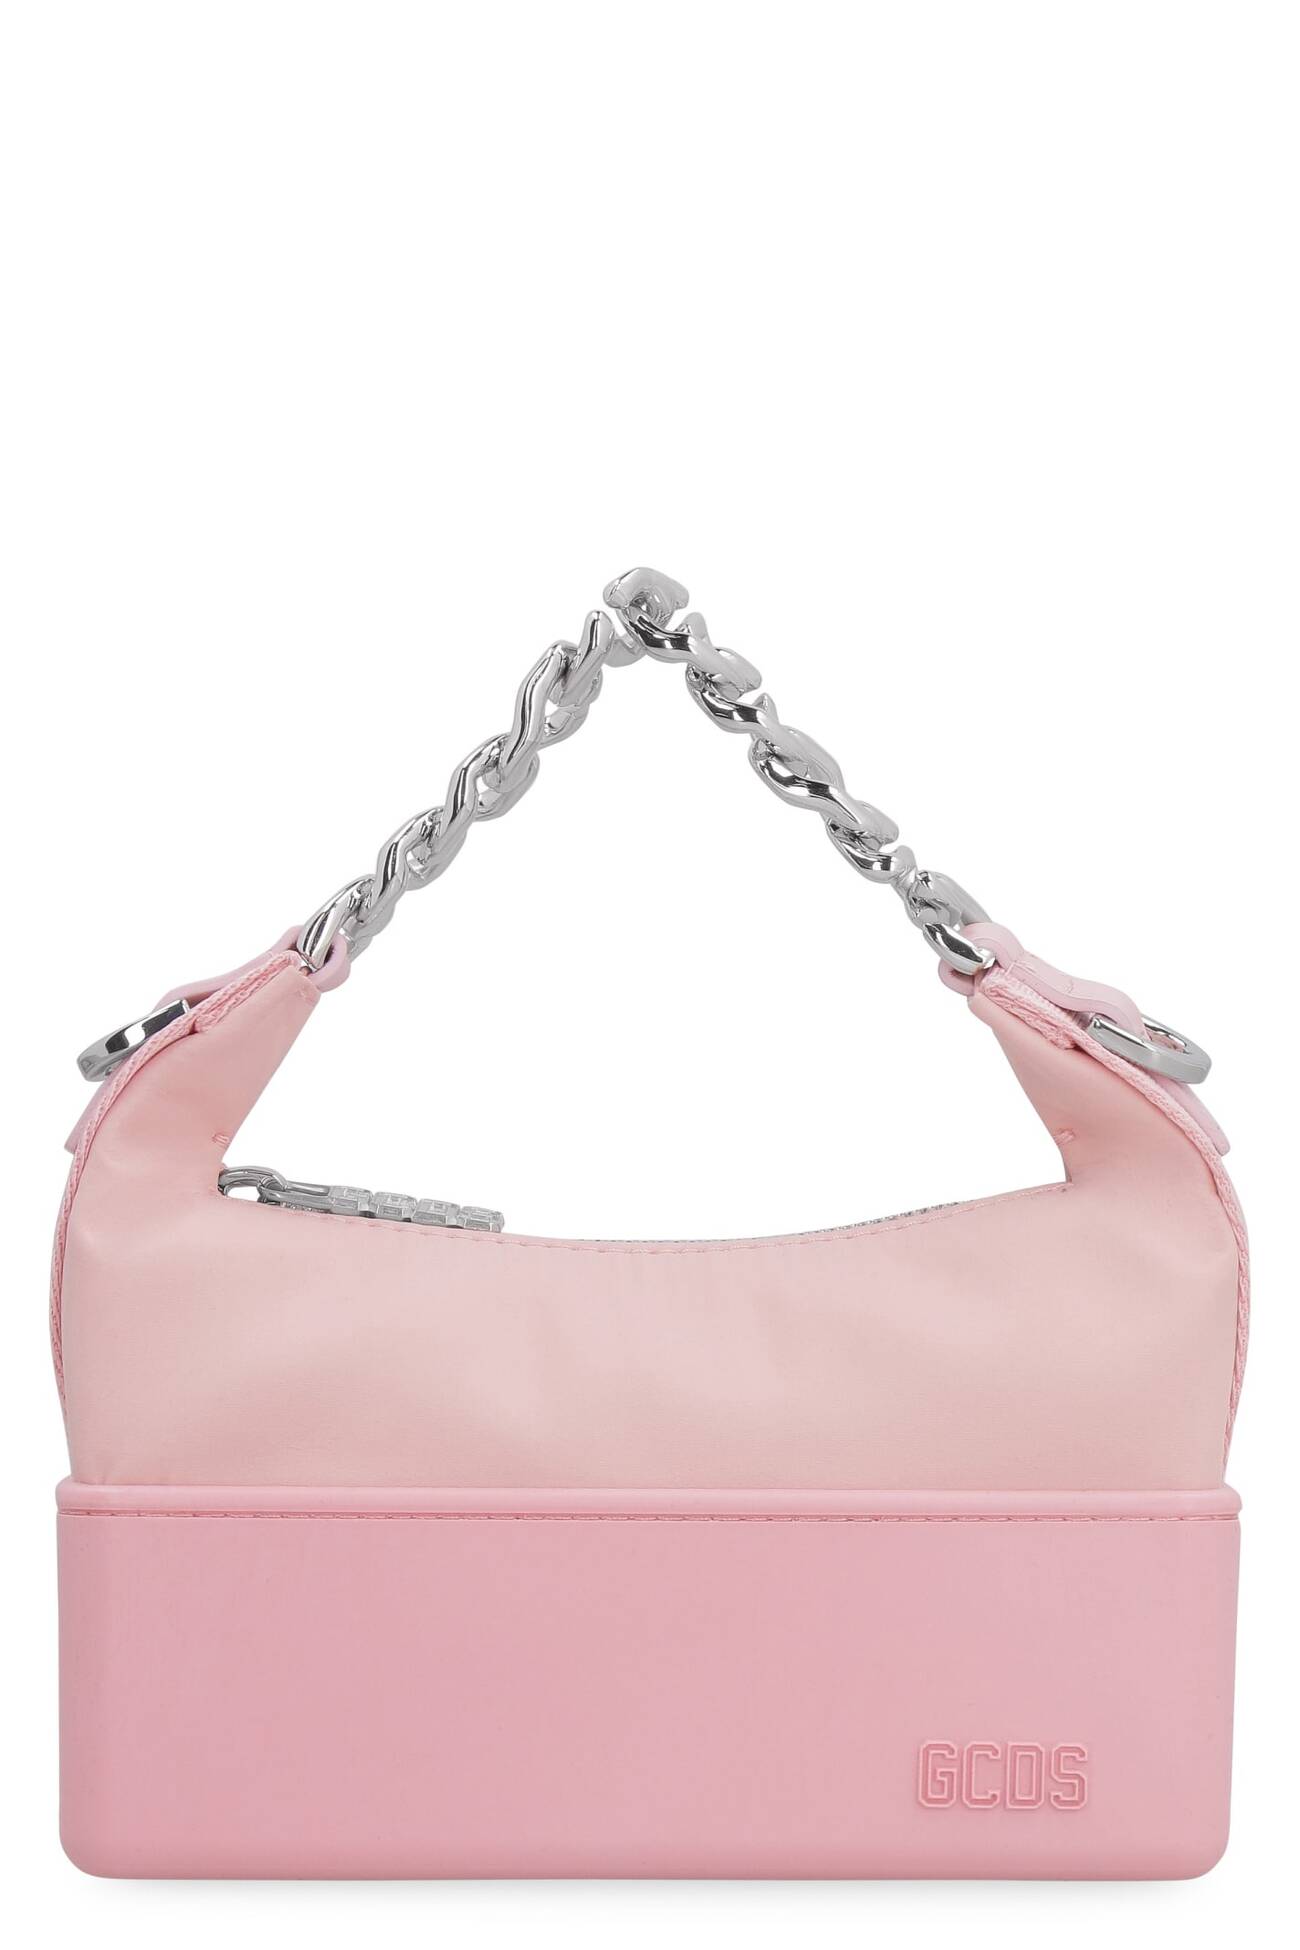 GCDS Matilda Nylon Messenger Bag in pink